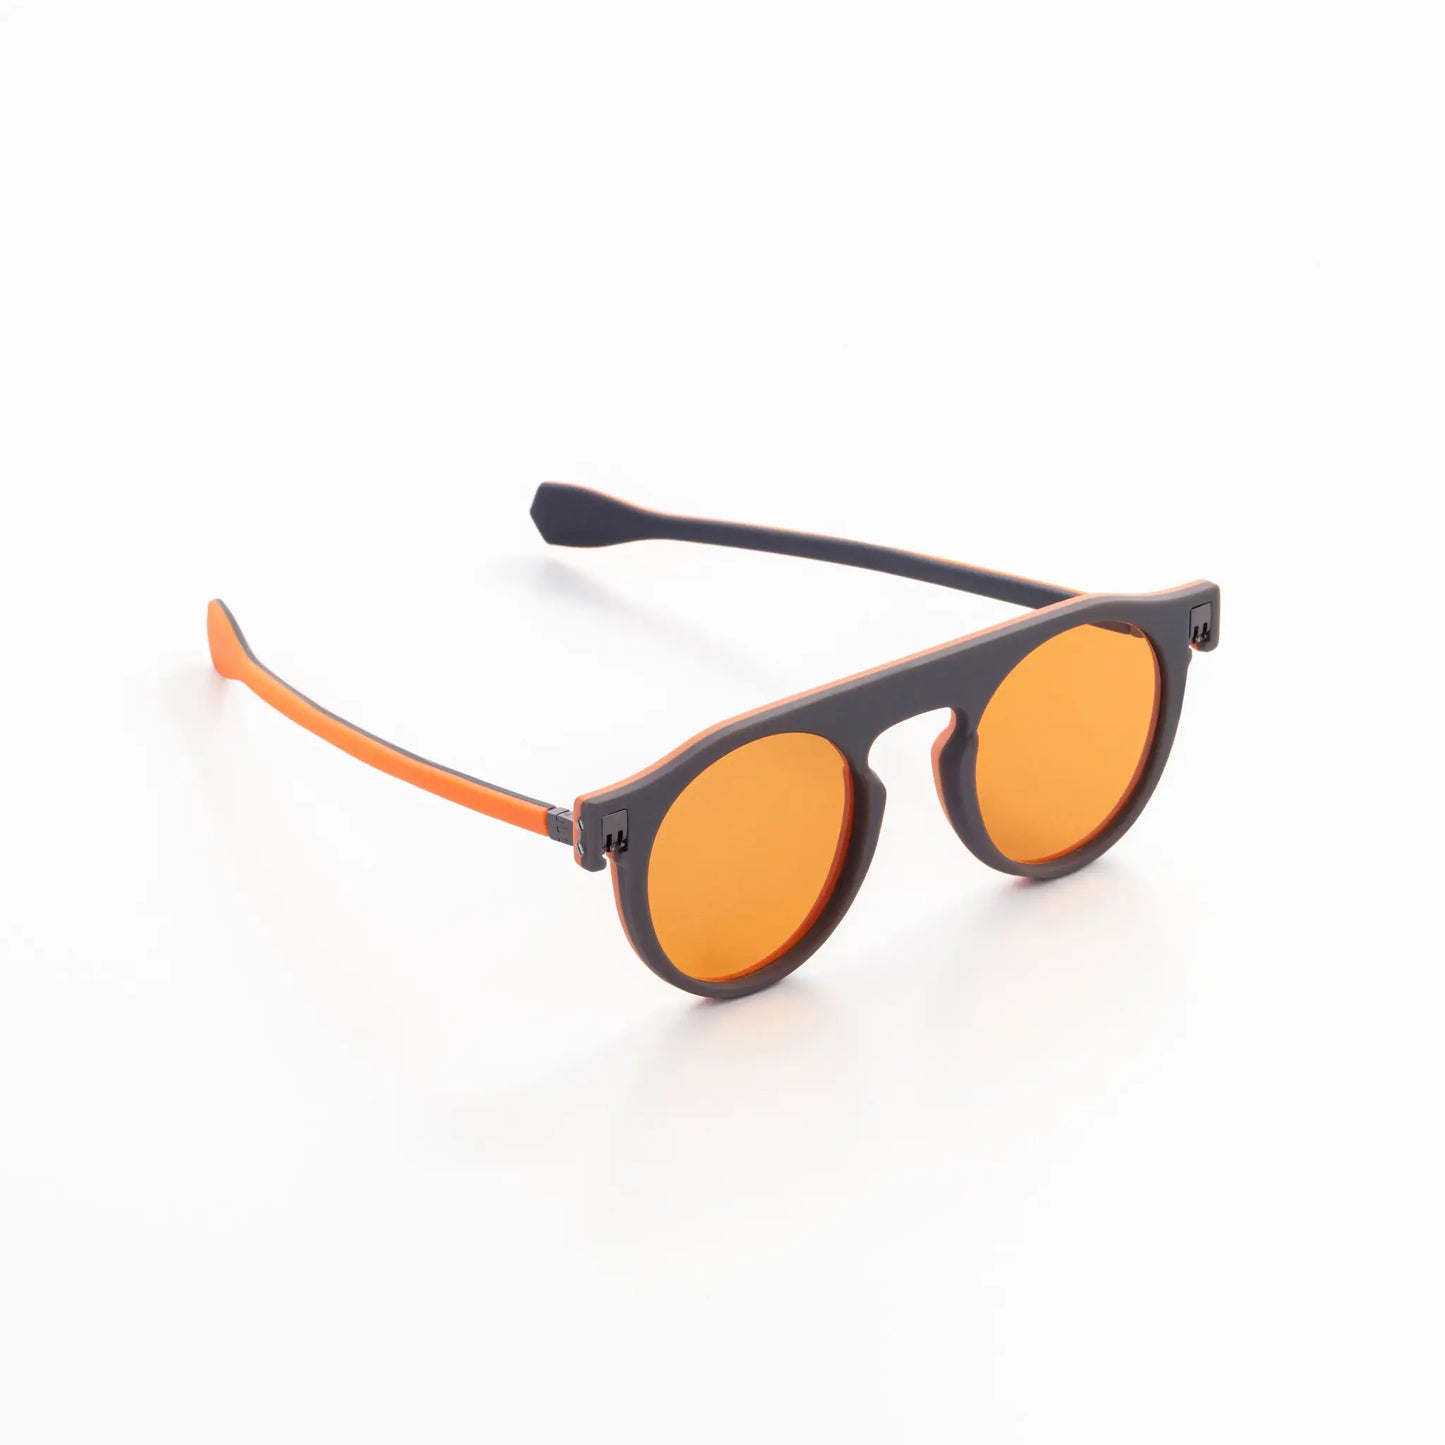 Reverso sunglasses grey & orange reversible & ultra light side view 2